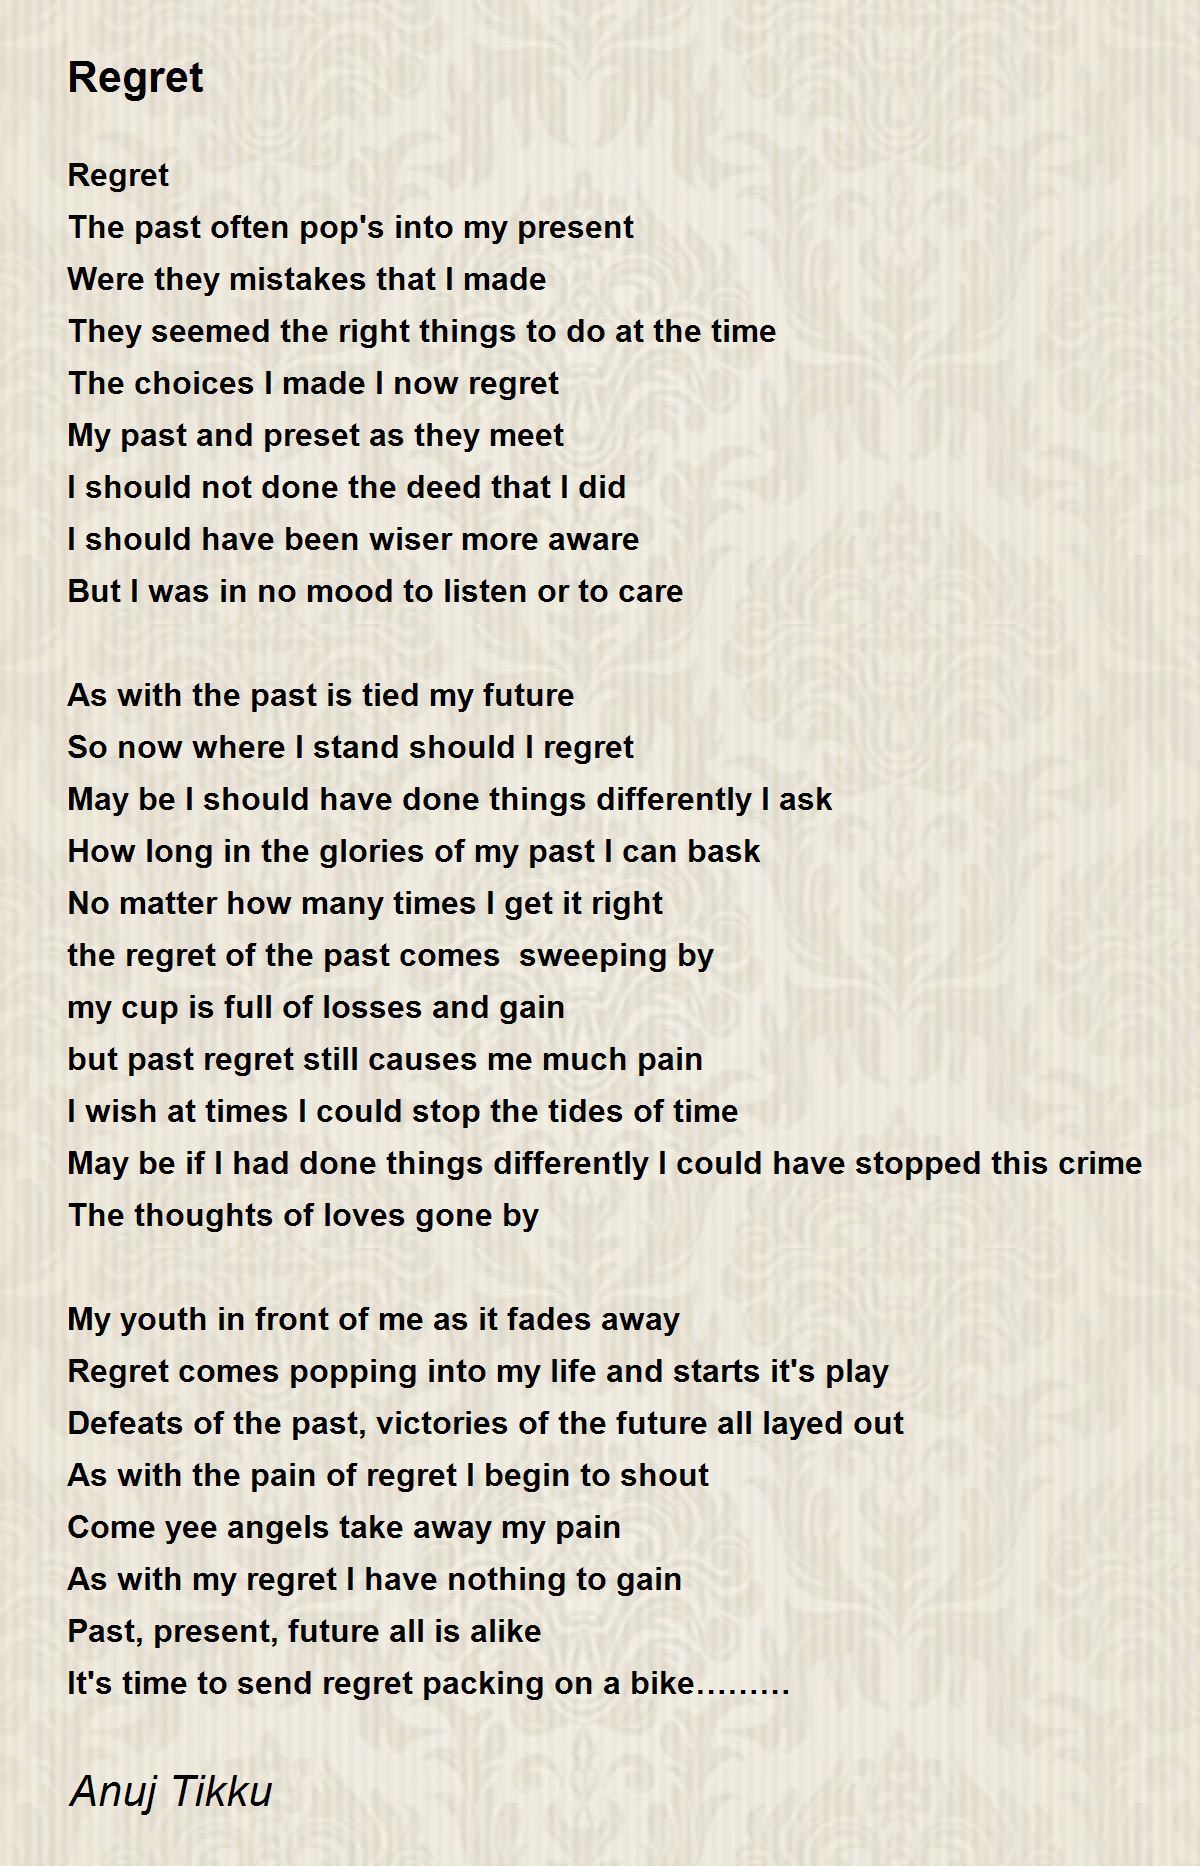 Regret - Regret Poem by Anuj Tikku